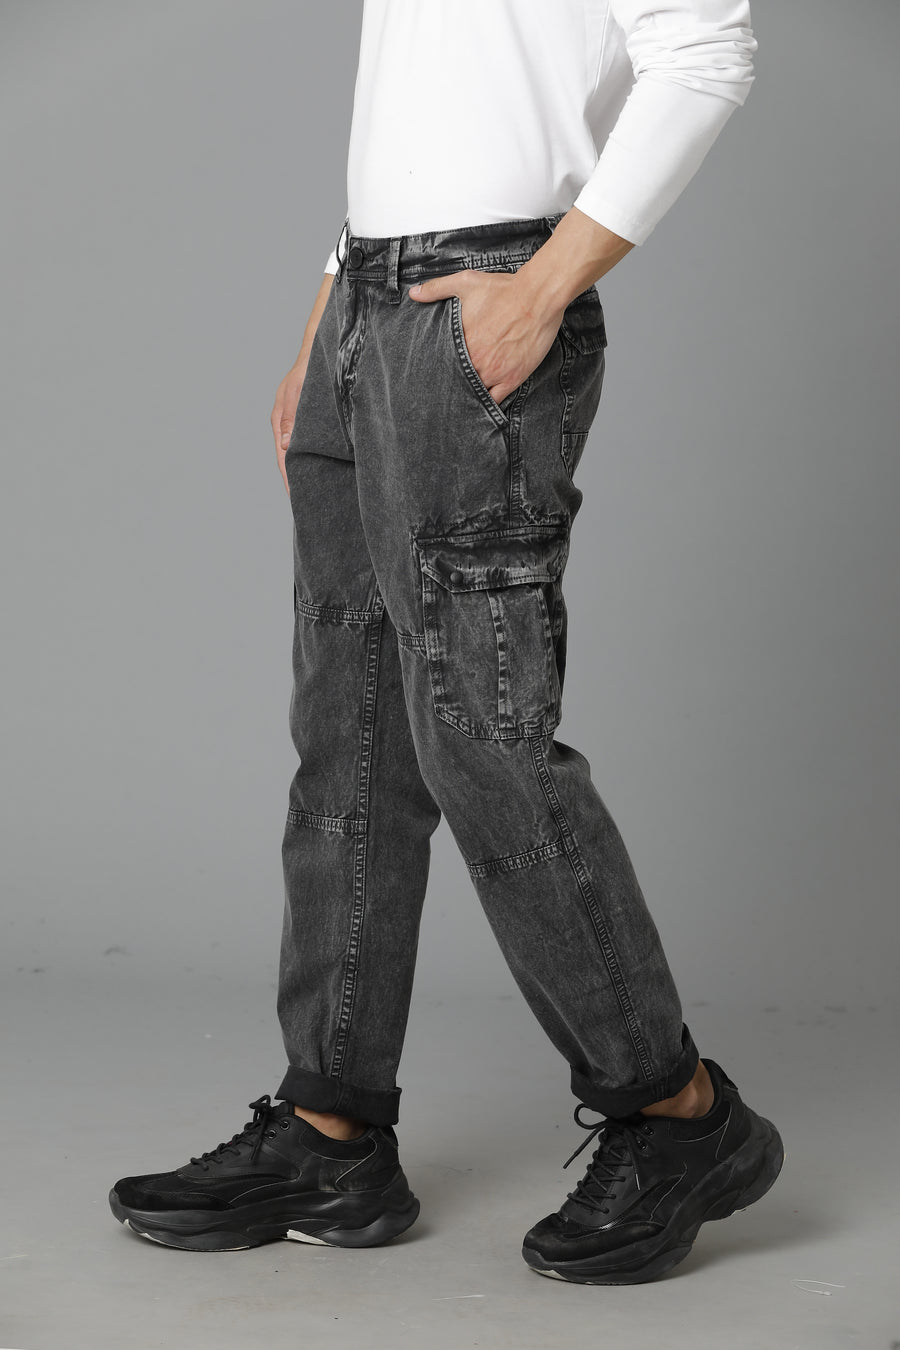 Voi Jeans Men's Black Non Denim Diaplo Cargo Fit Jeans - VOND0203